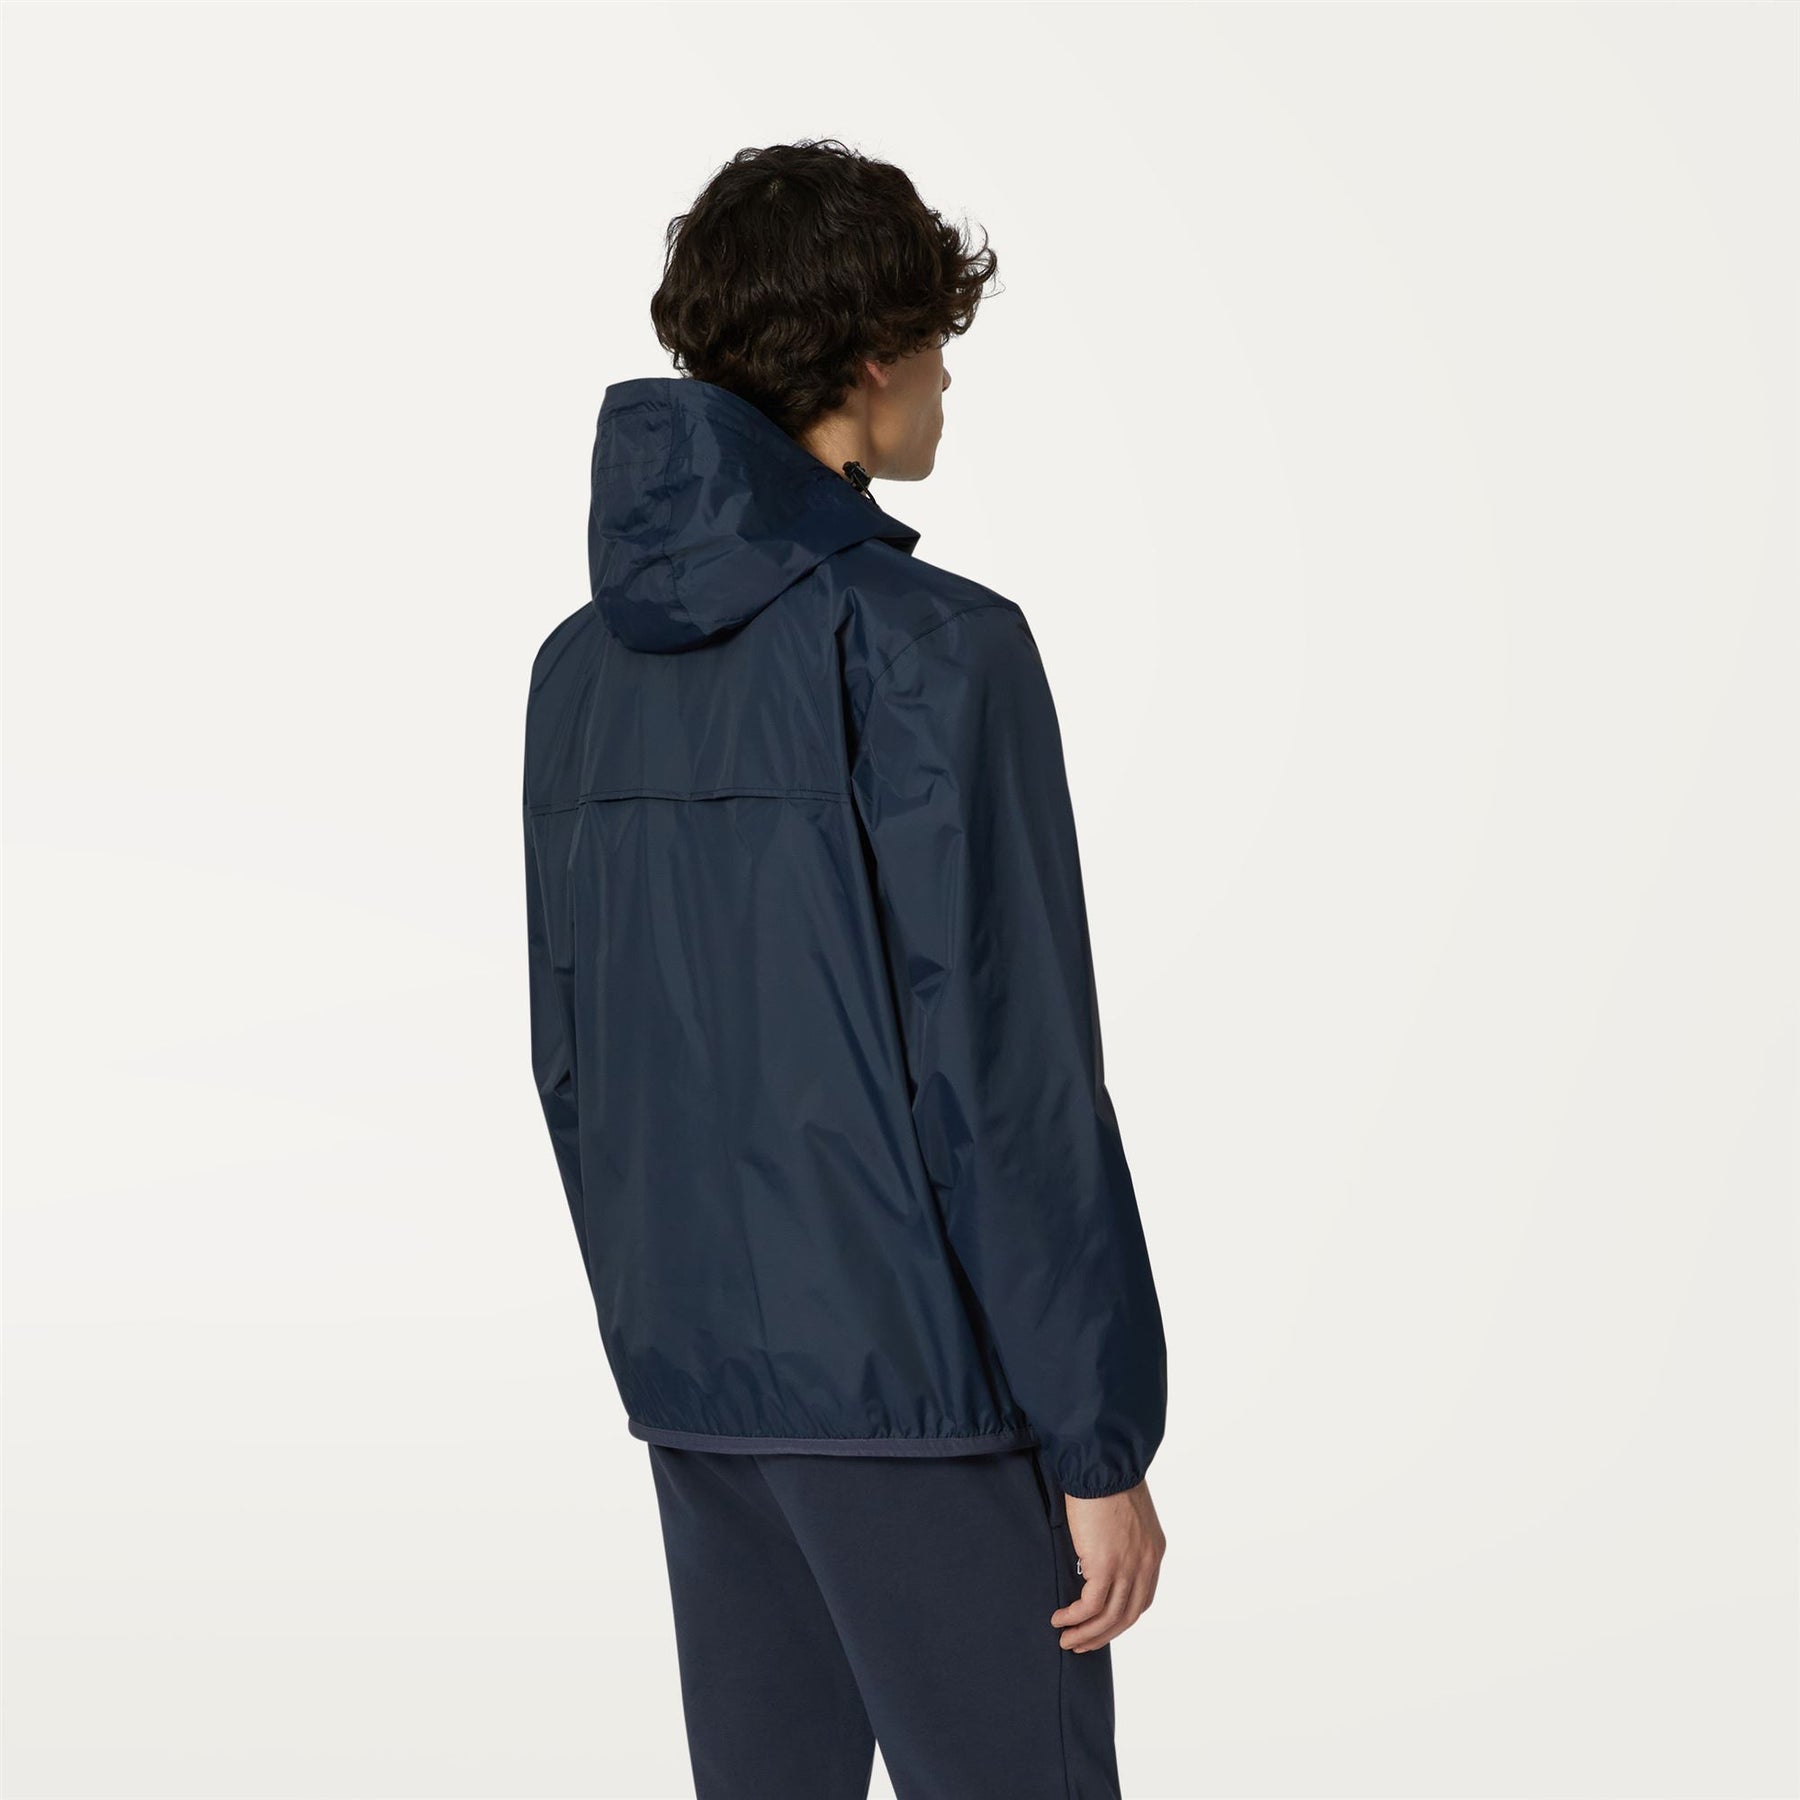 Leon - Packable Quarter Zip Rain Jacket in Blue Depht